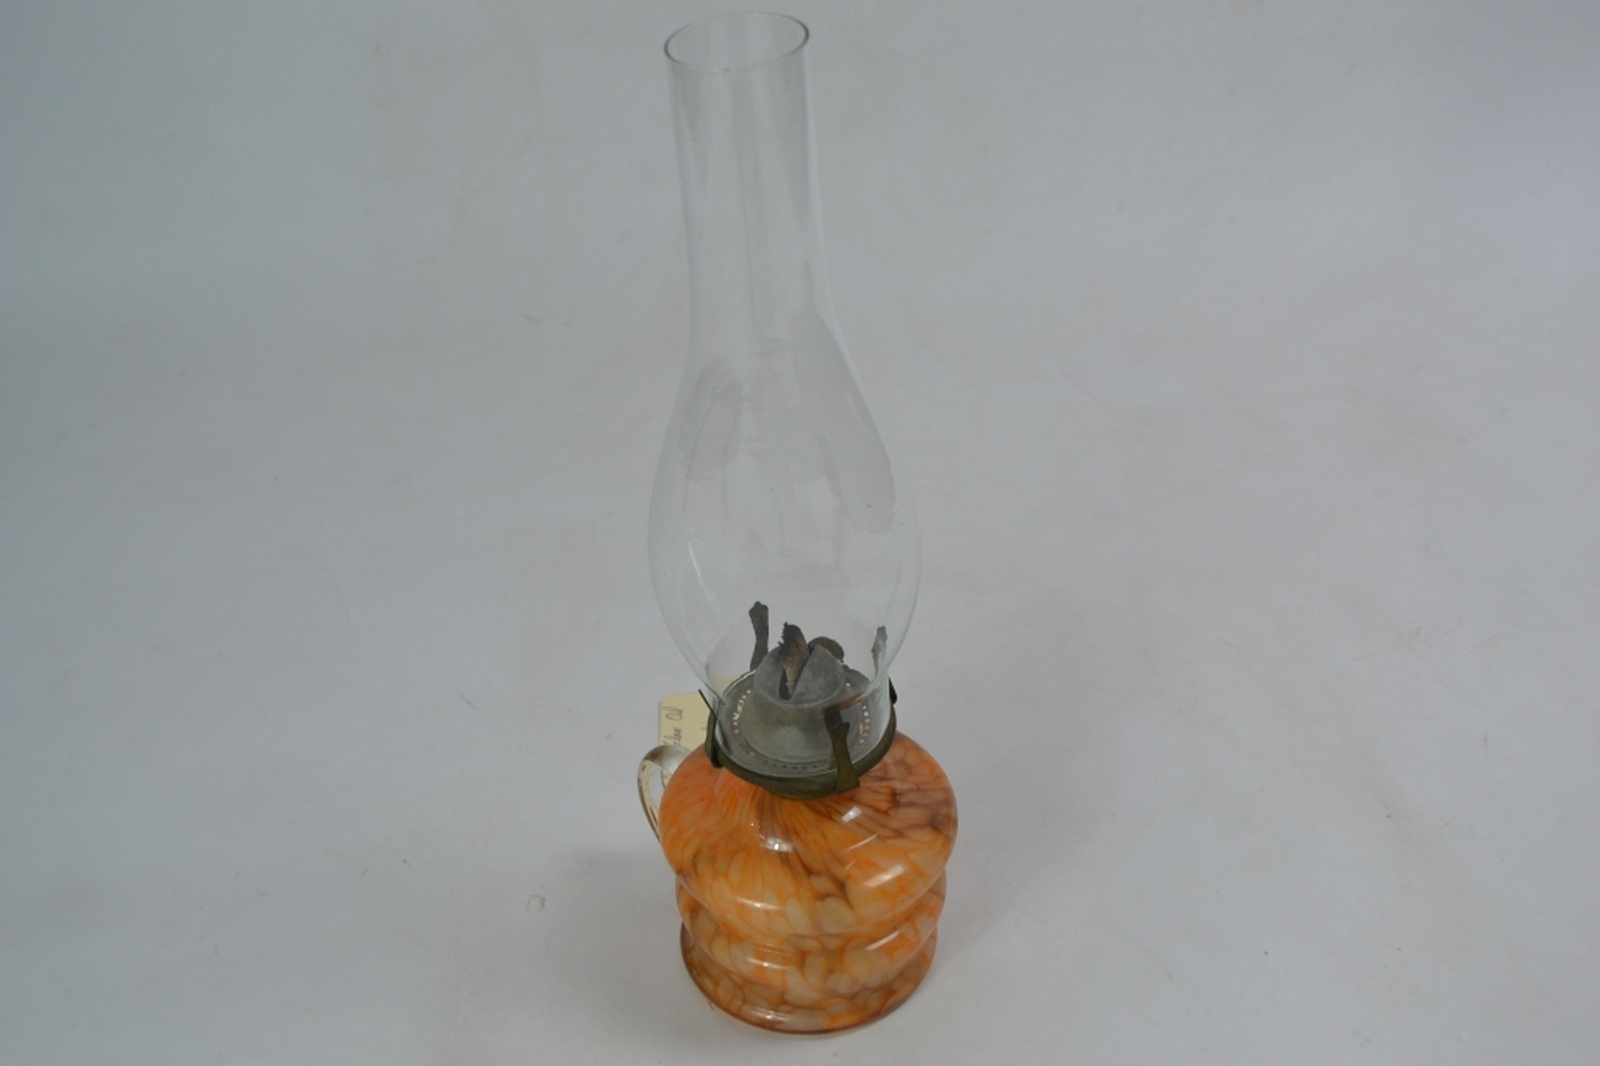 Early 20th century glass oil lamp with mottled orange reservoir